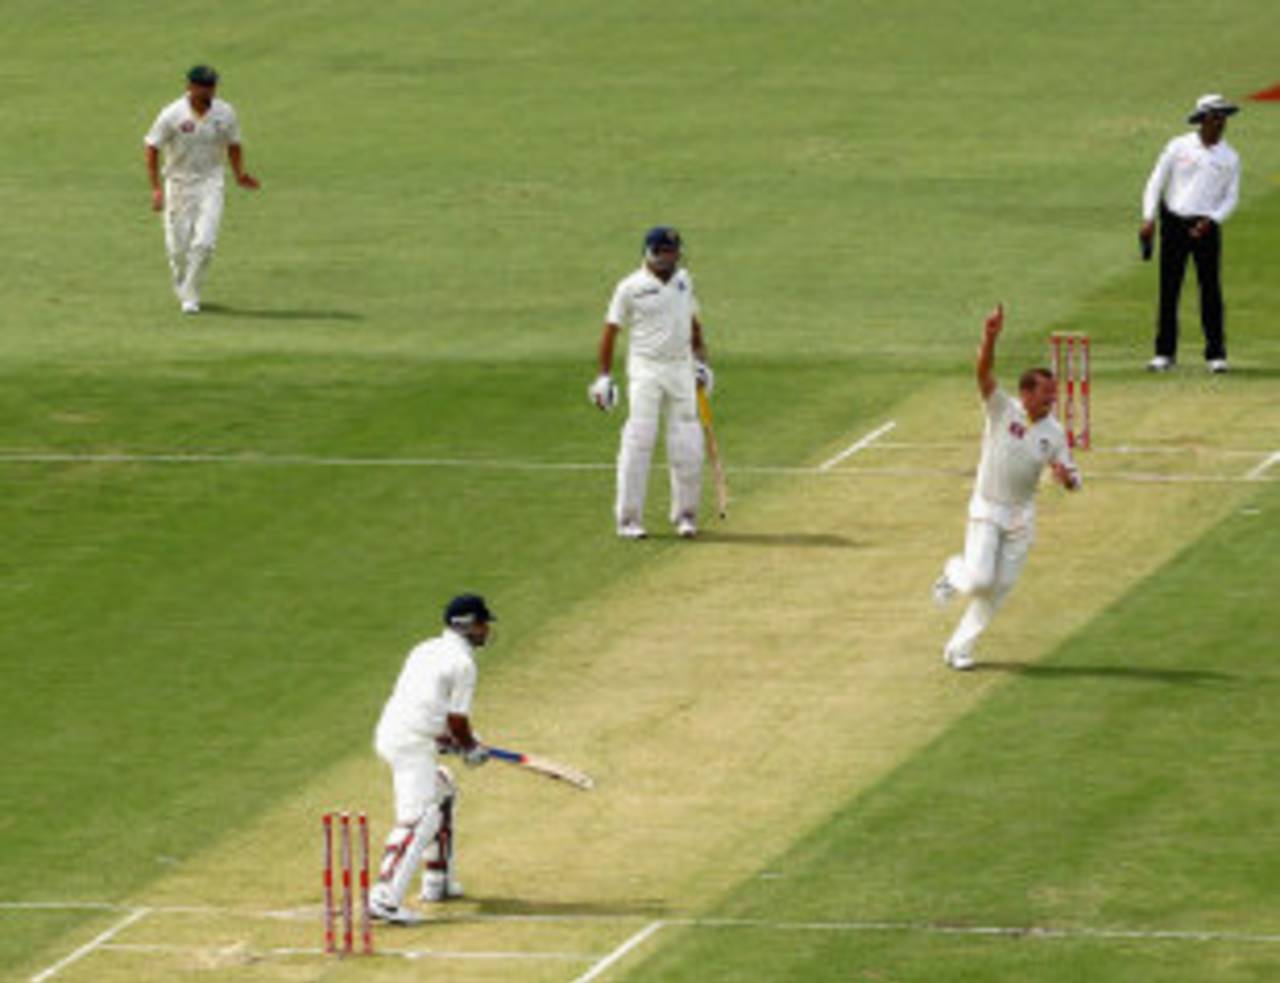 Peter Siddle celebrates getting rid of Virat Kohli, Australia v India, 3rd Test, Perth, 1st day, January 13, 2012